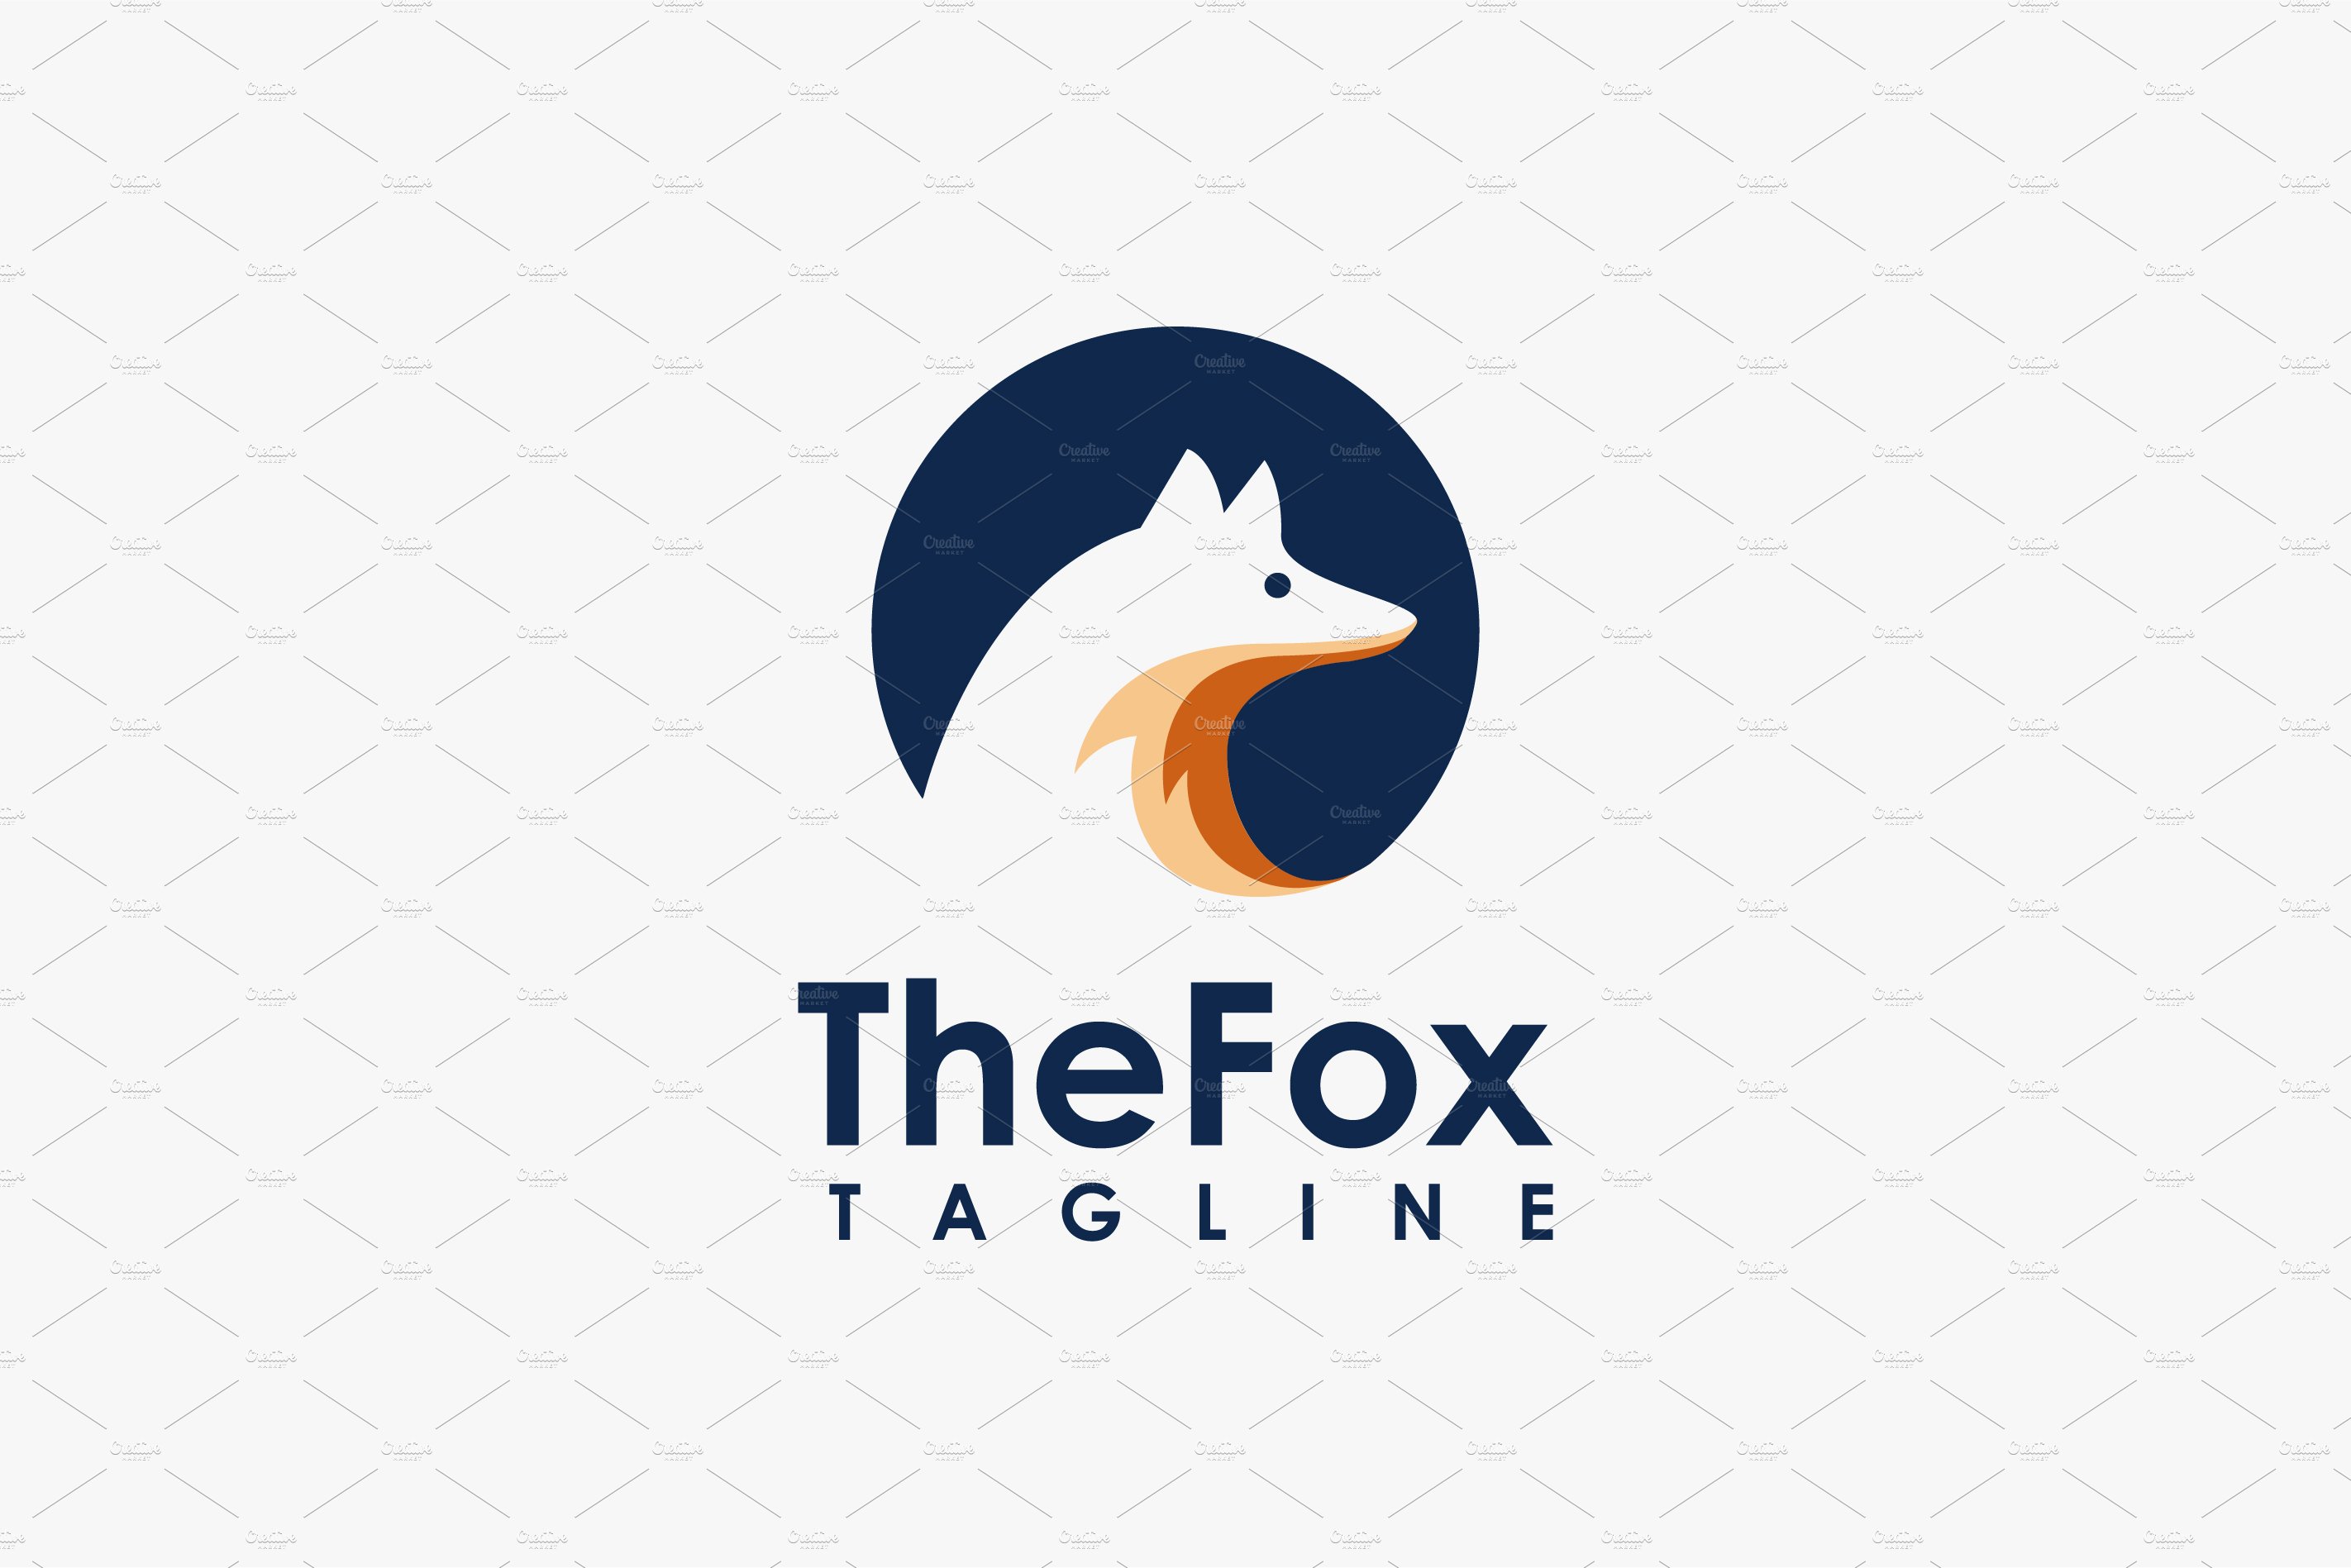 Simple round Fox logo icon cover image.